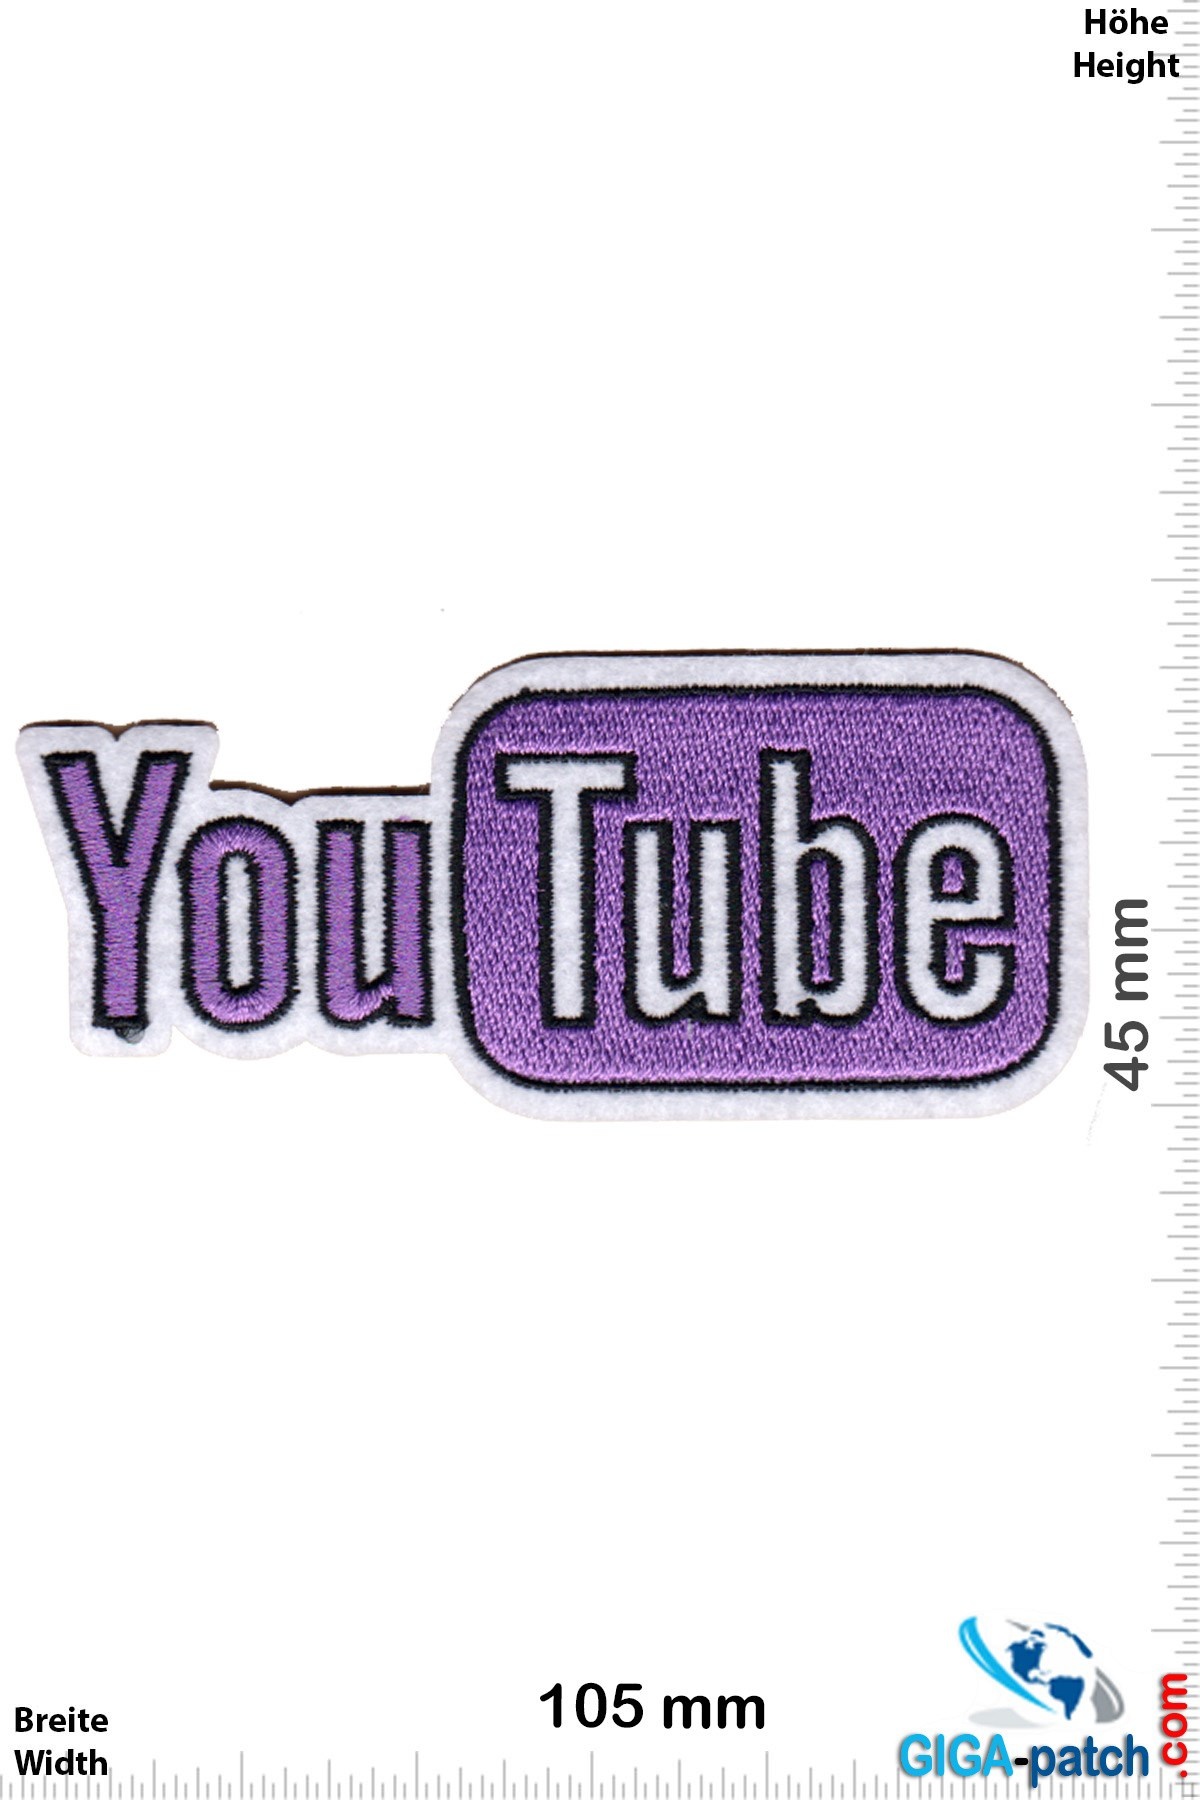 YouTube - purple - Nerd